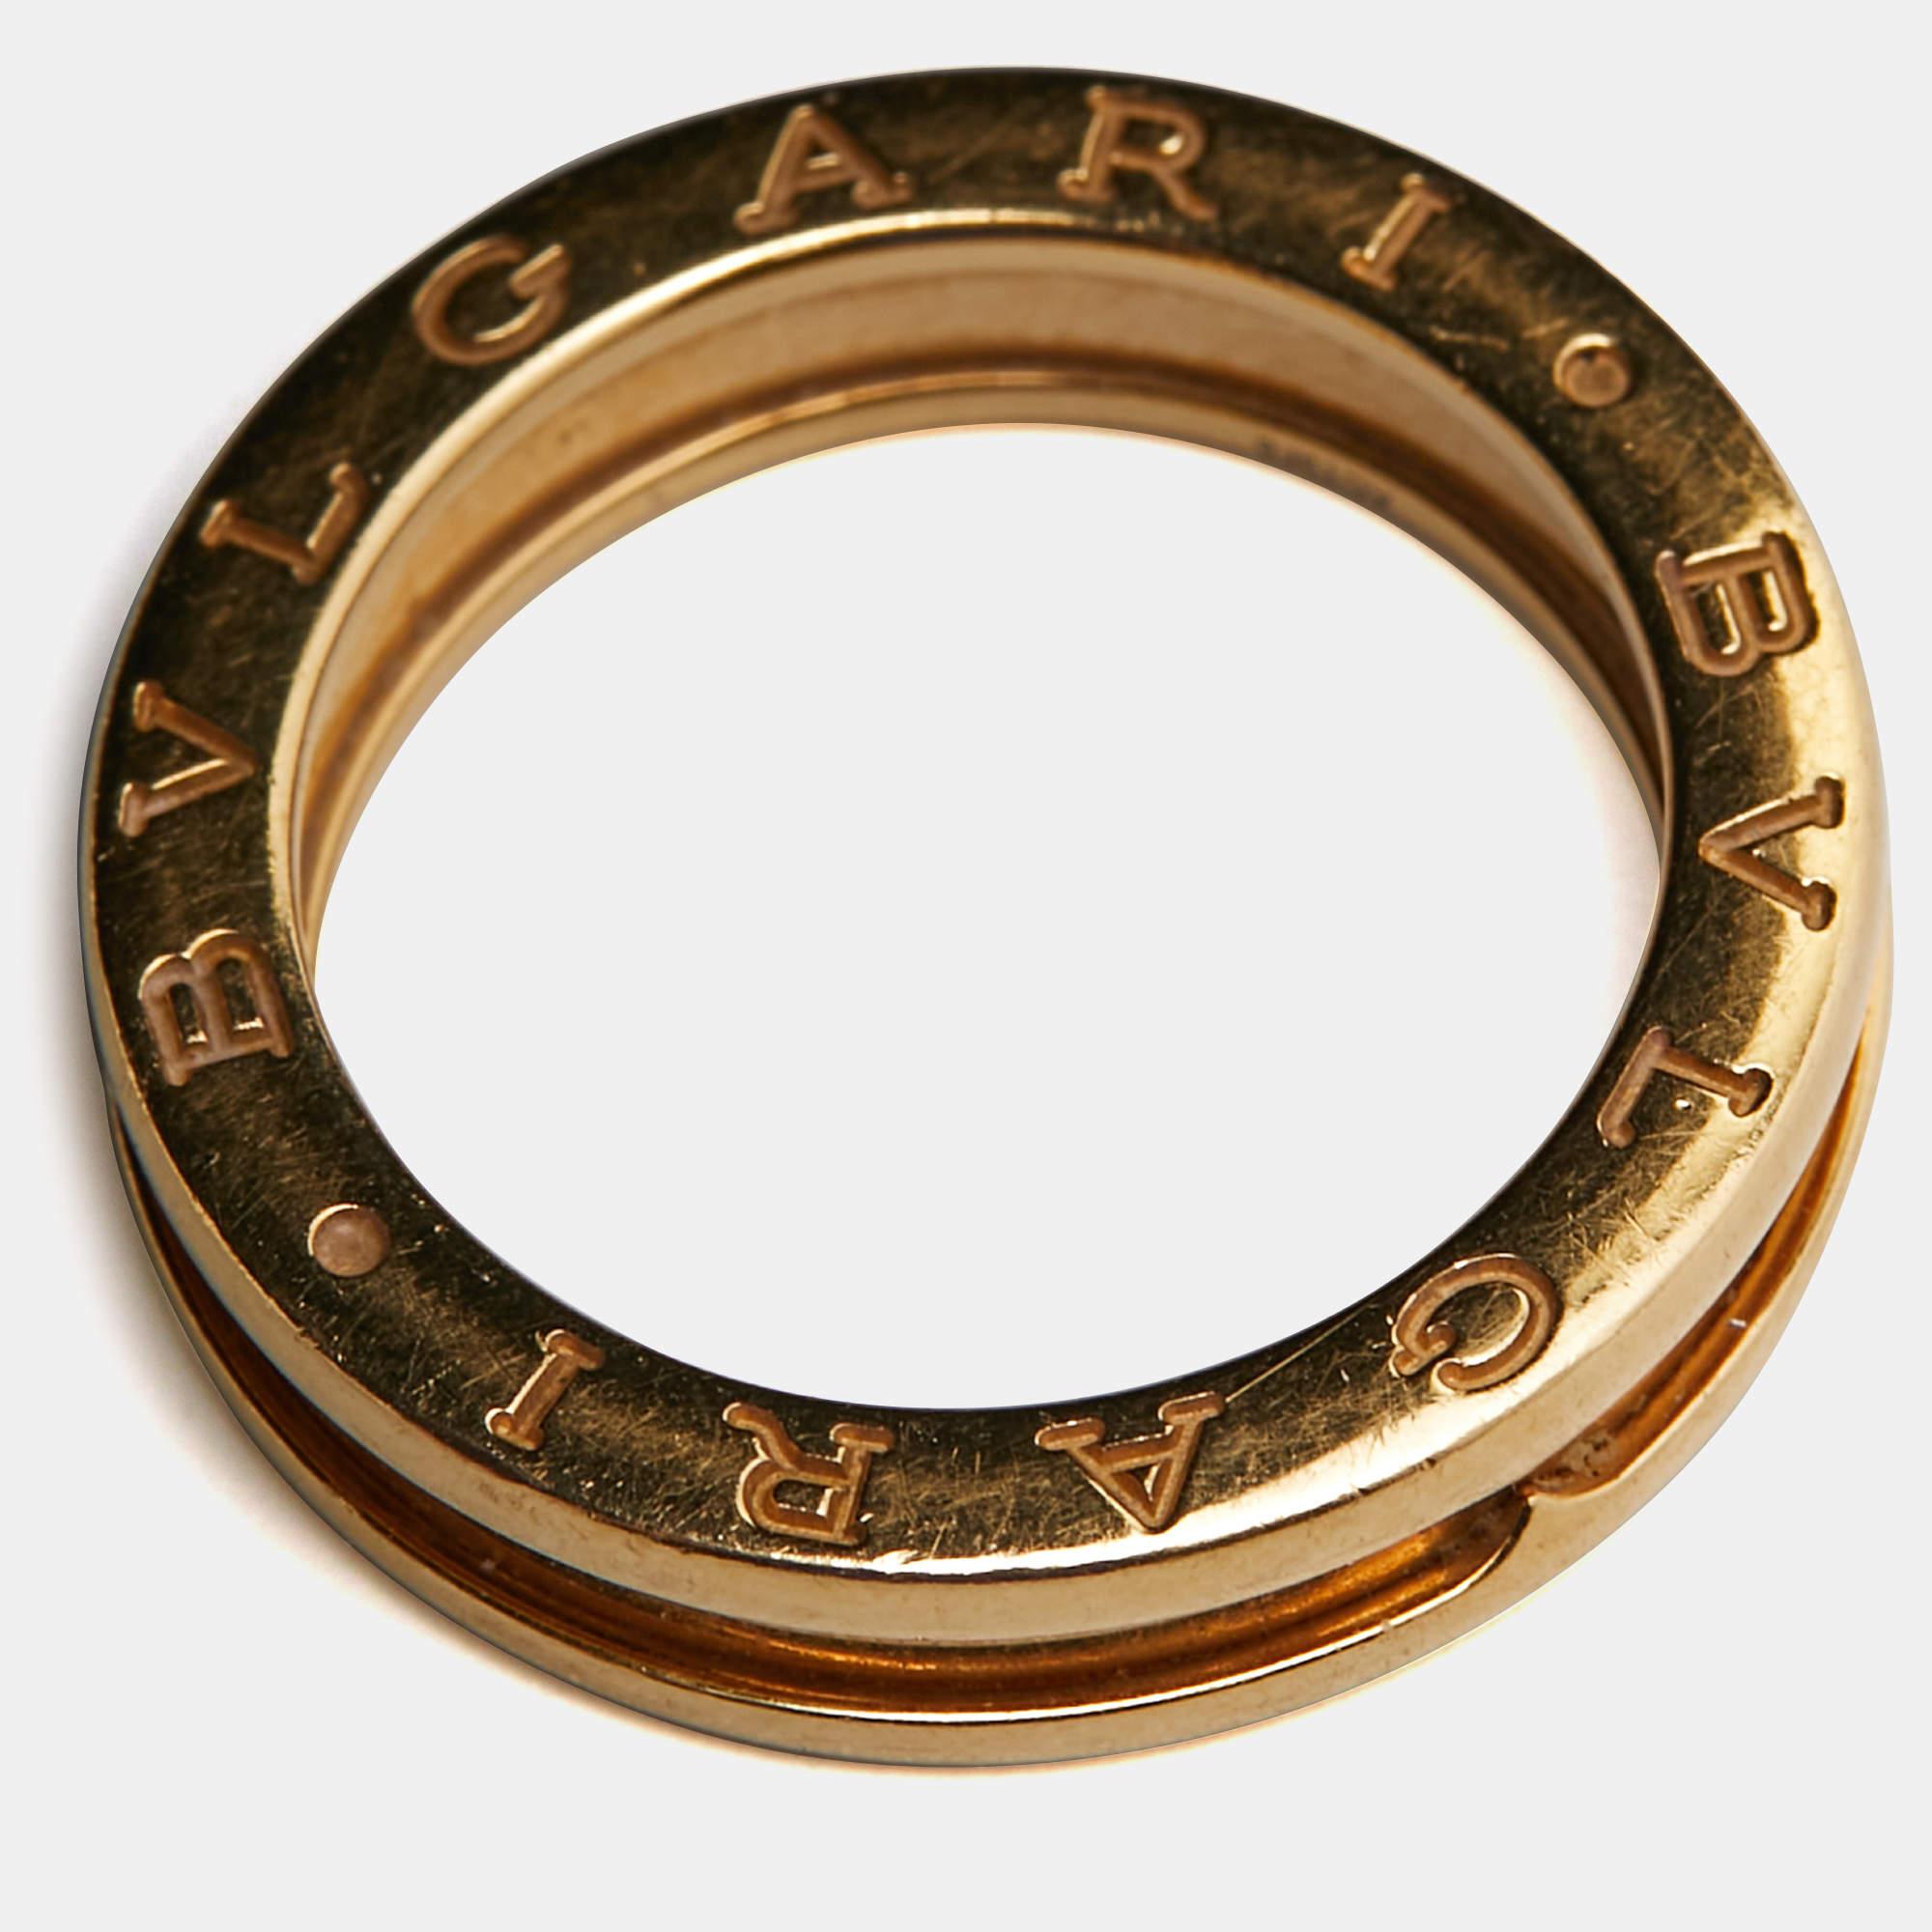 Bvlgari B.Zero1 1-Band 18k Yellow Gold Ring Size 55 For Sale 1